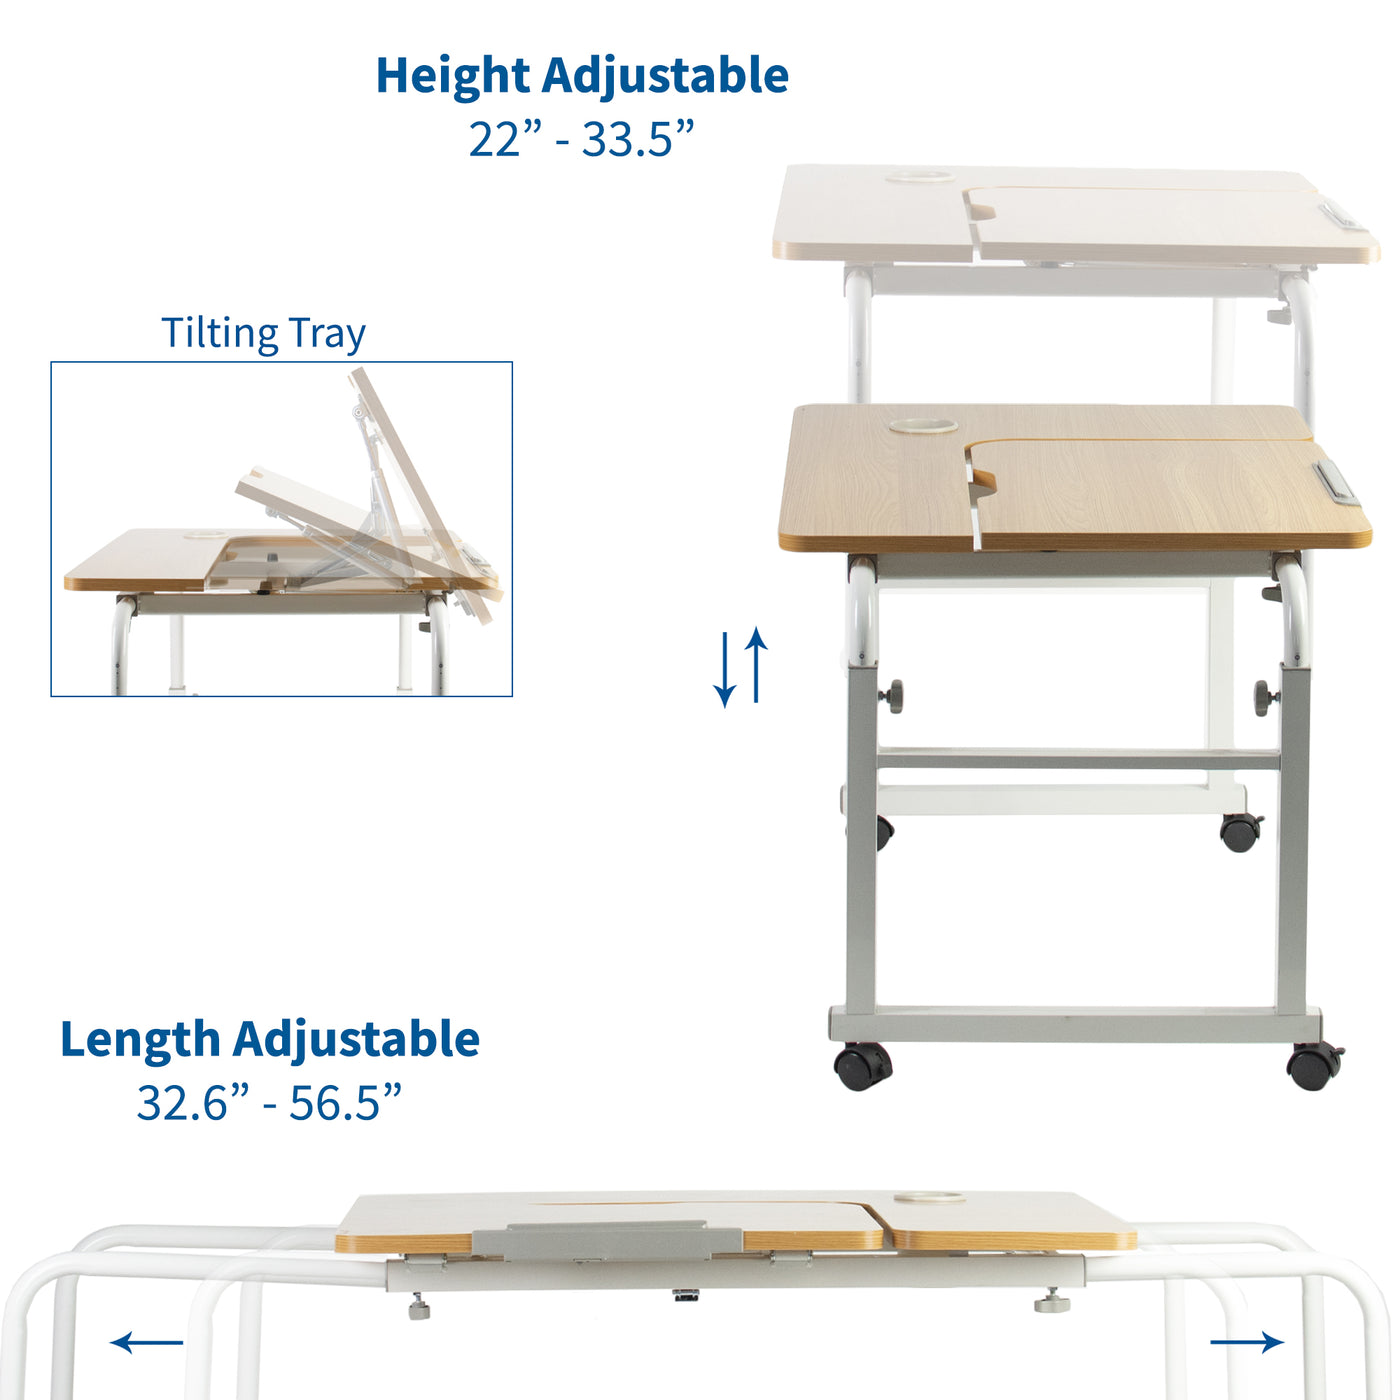 Light wood white frame design of length and height adjustable desk for kids.